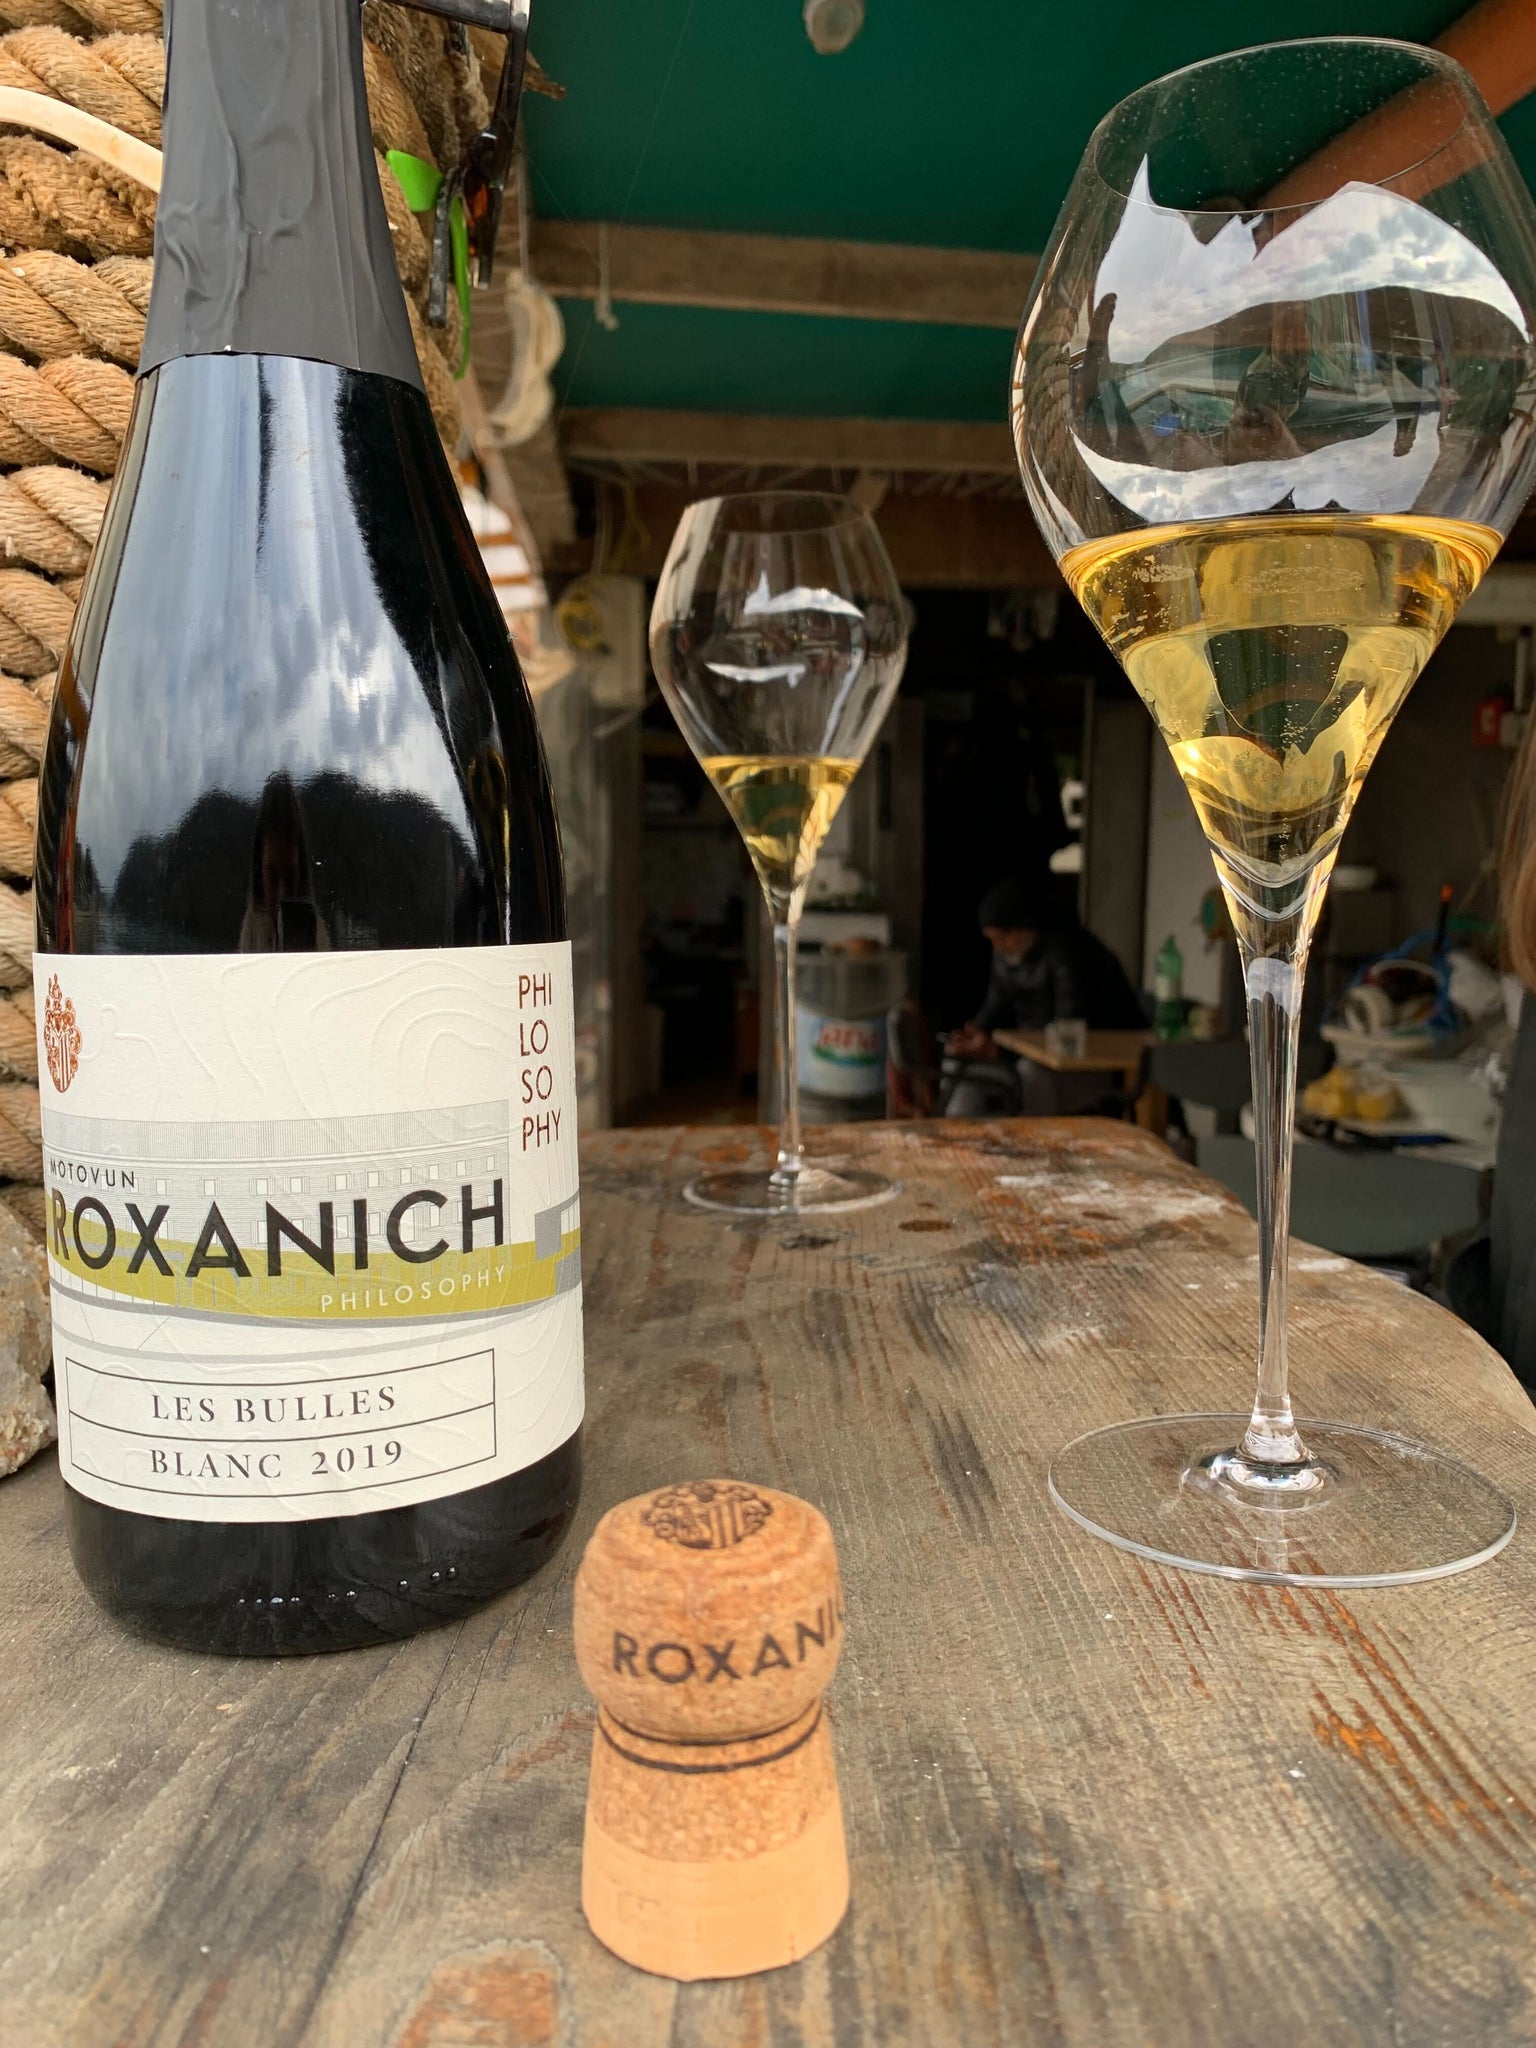 Roxanich Les Bulles Blanc 2019, sparkling wine, Malvasia istrianna